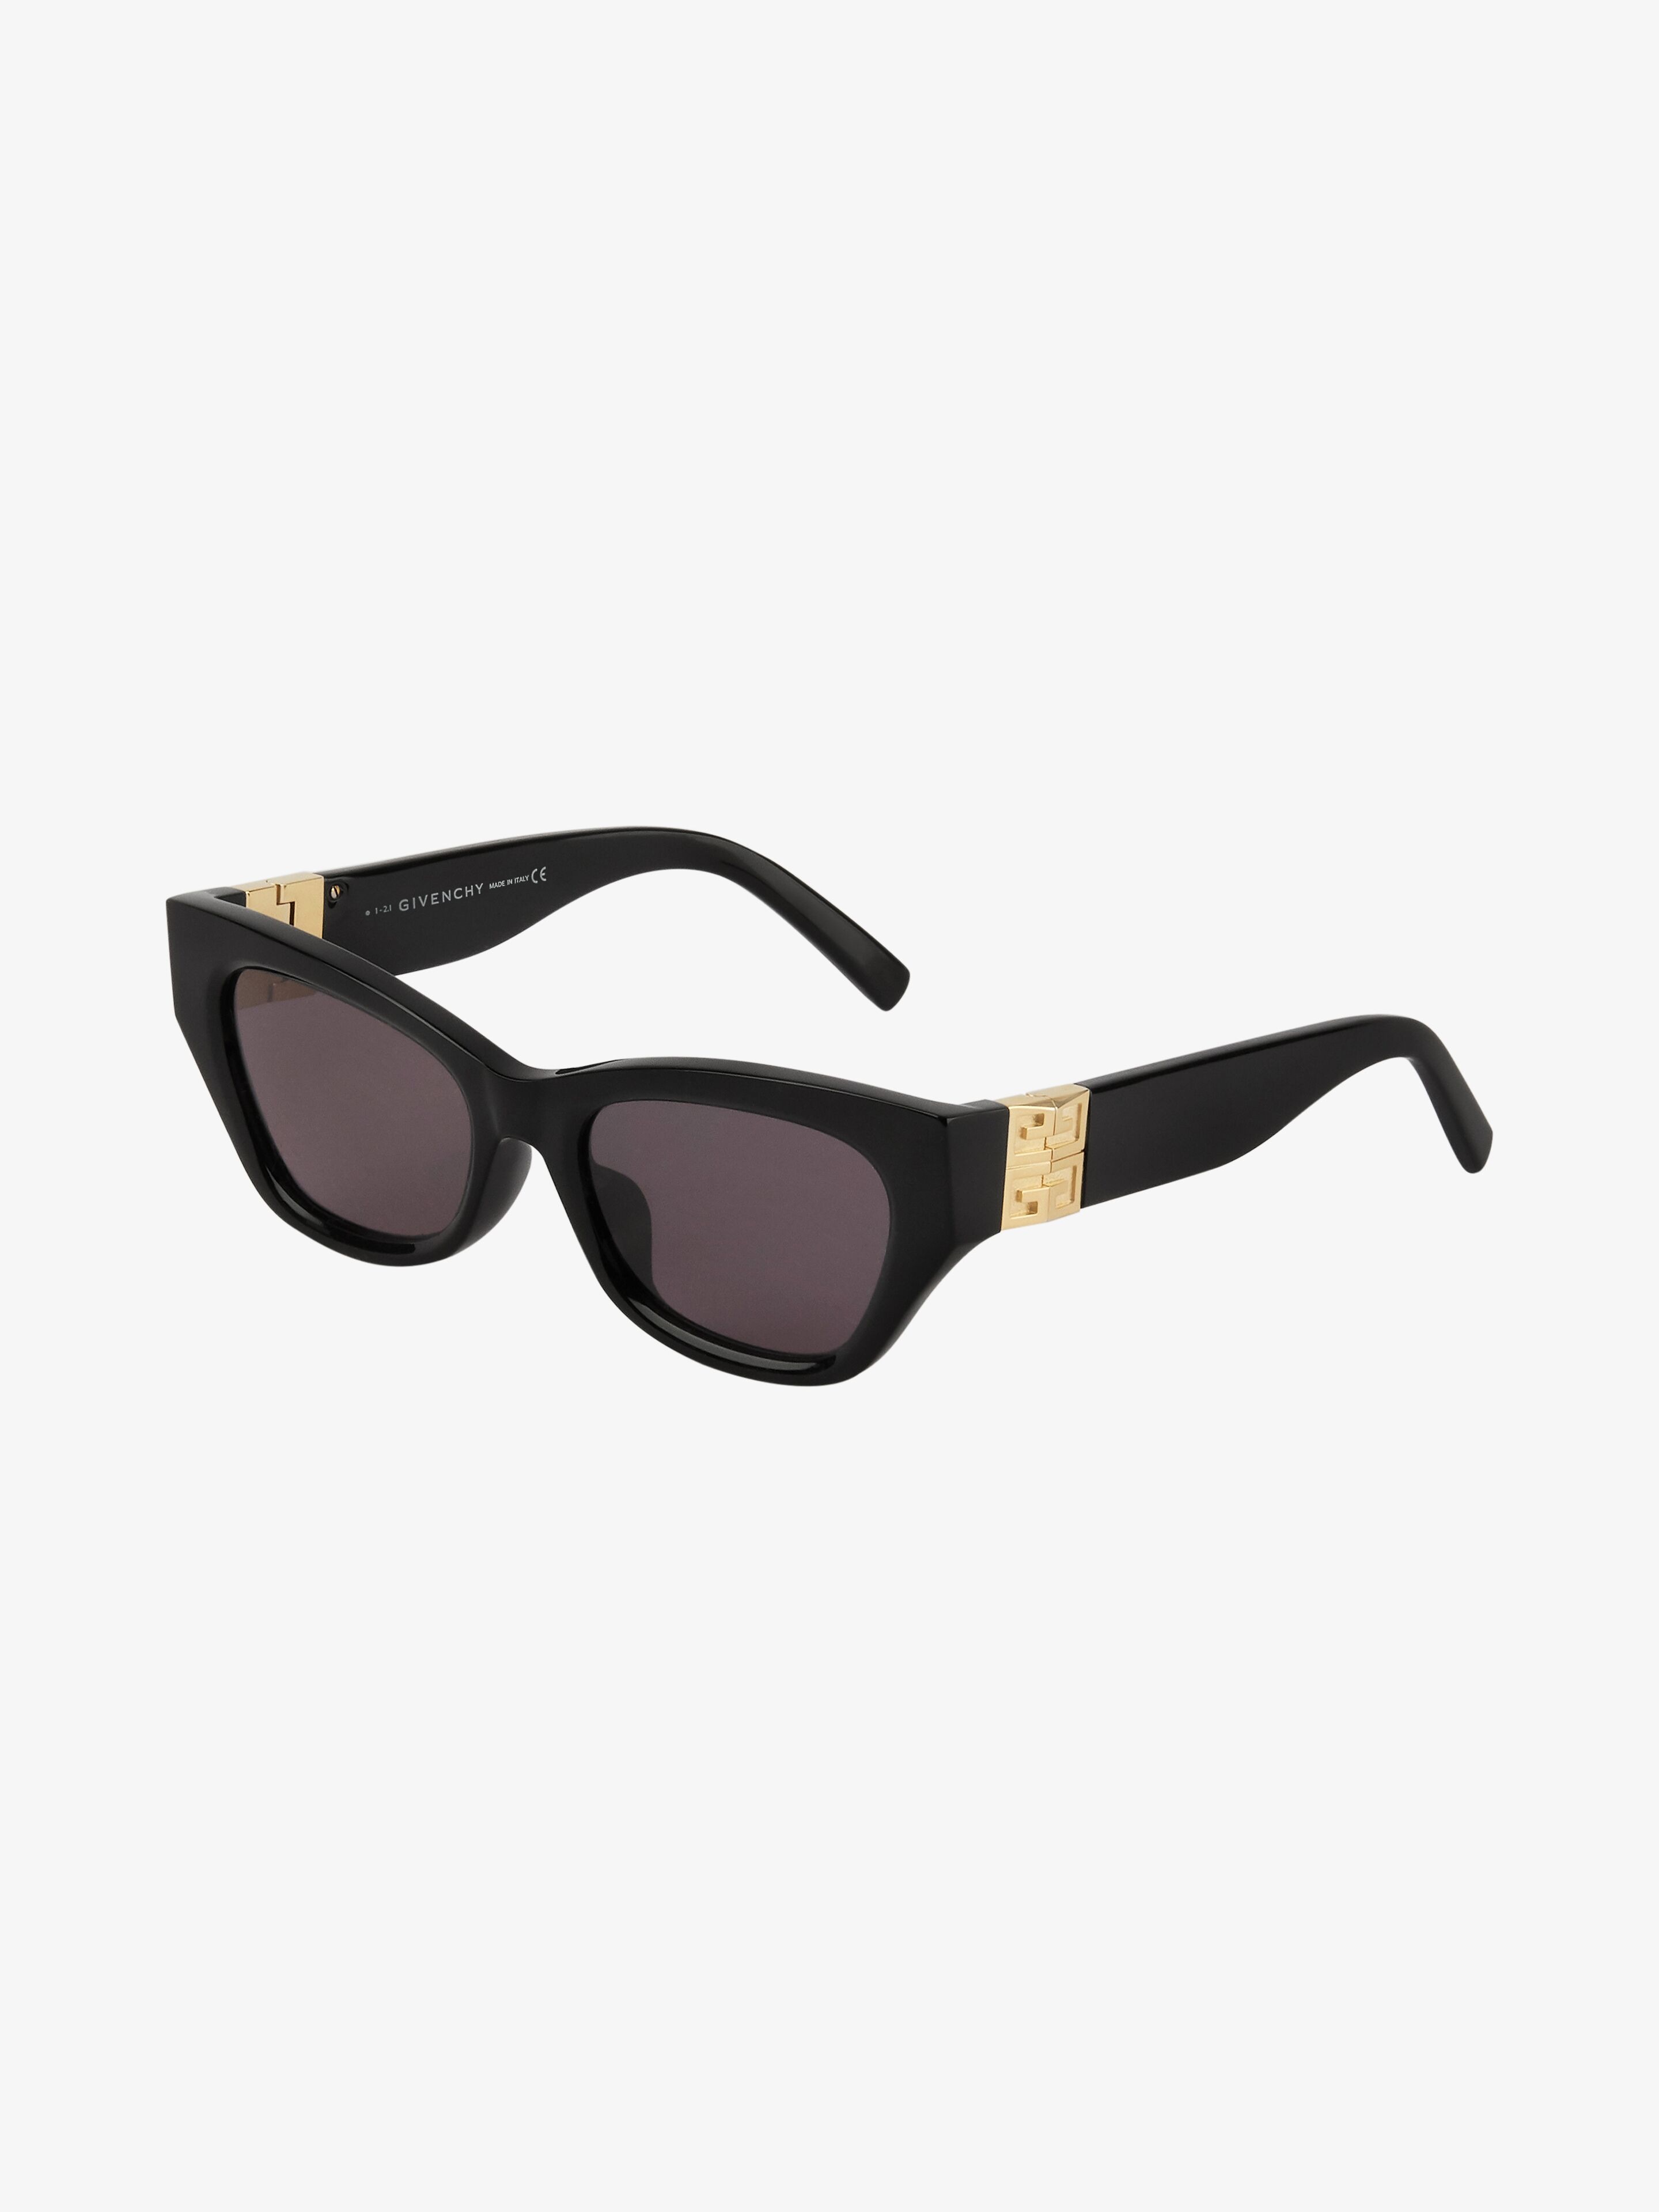 Givenchy White 4G Sunglasses